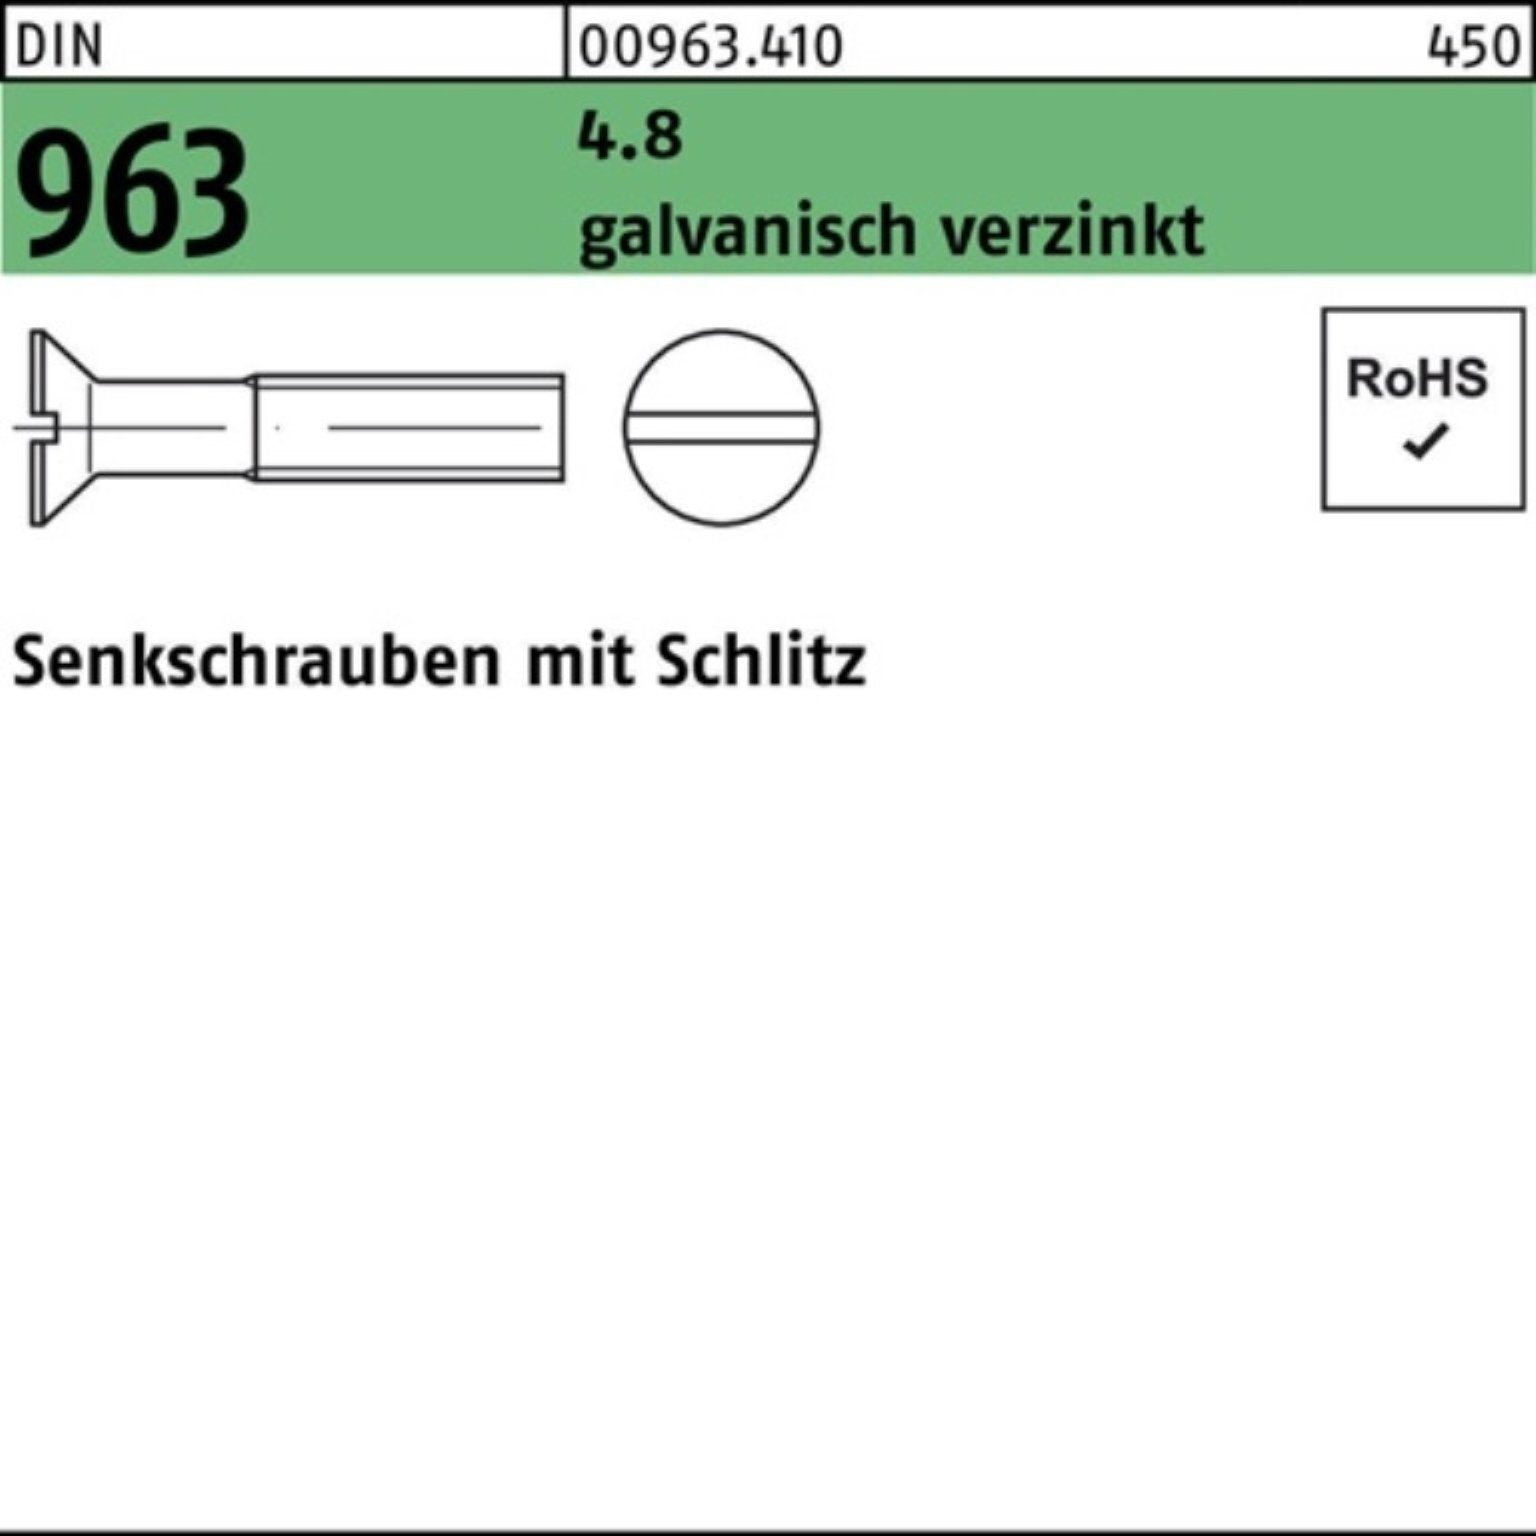 Reyher Senkschraube 100er 4.8 Stü 50 M16x 50 galv.verz. Schlitz 963 Senkschraube Pack DIN